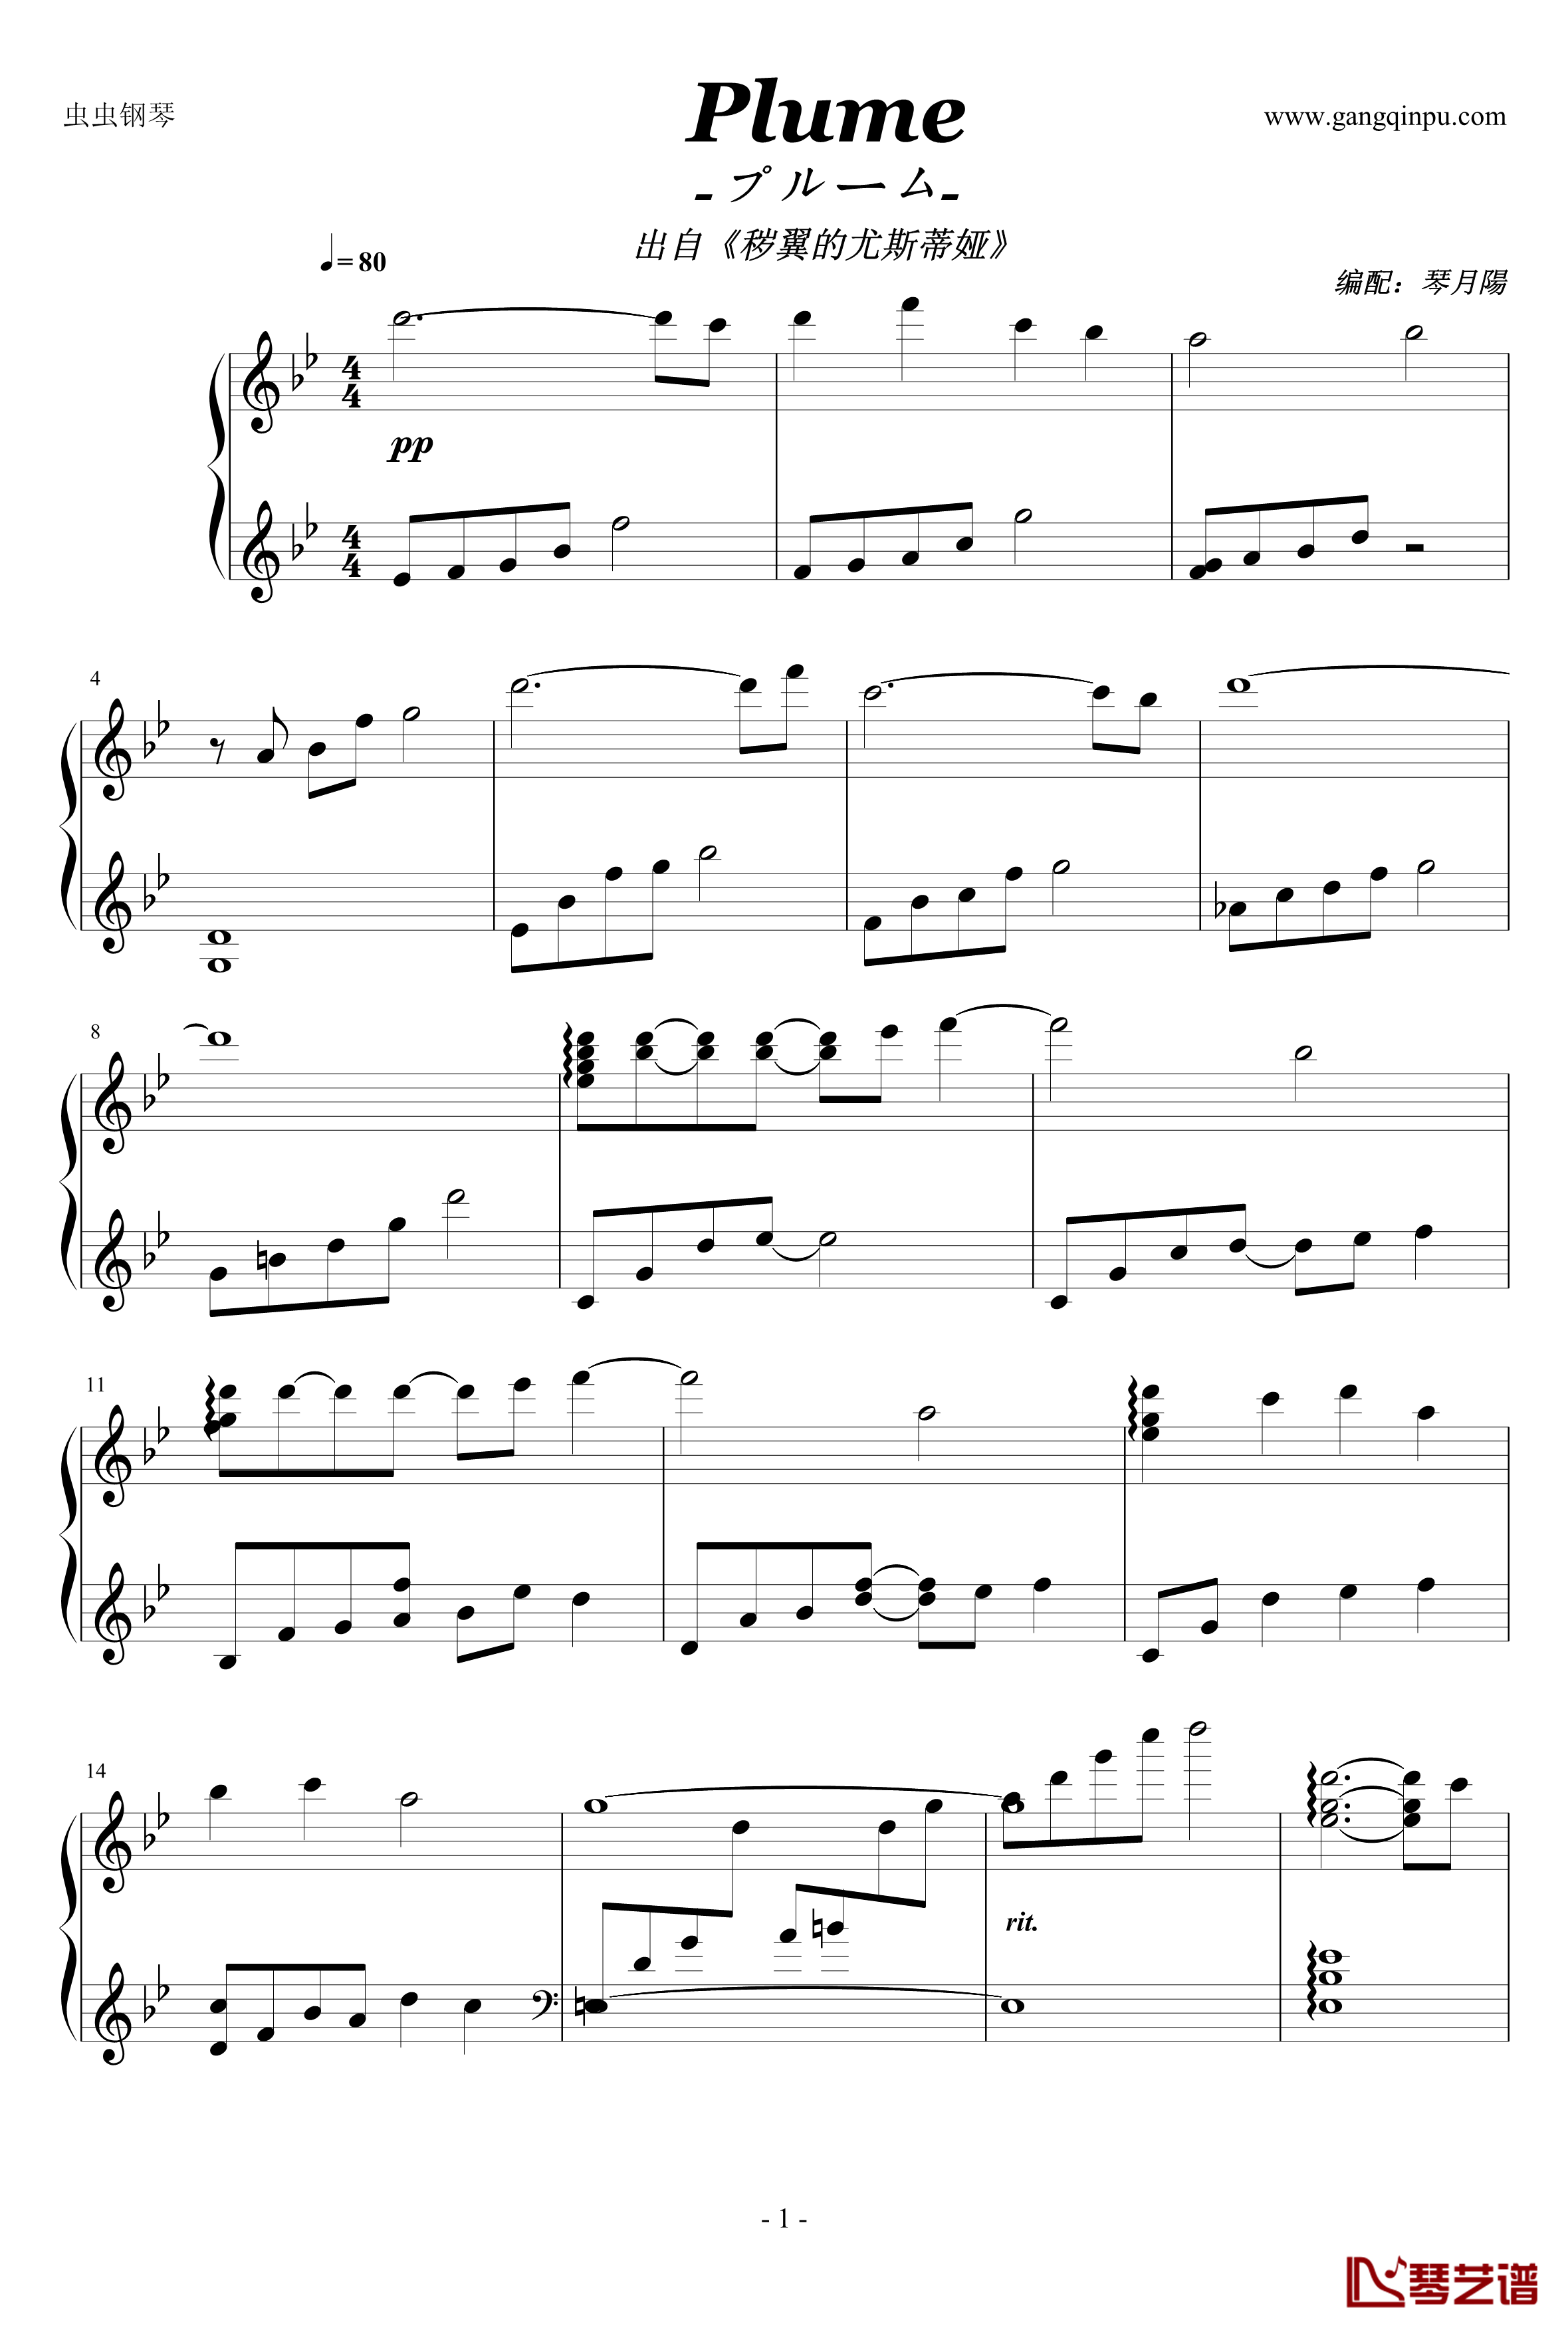 Plume-プルーム钢琴谱-完善版-秽翼的尤斯蒂娅1